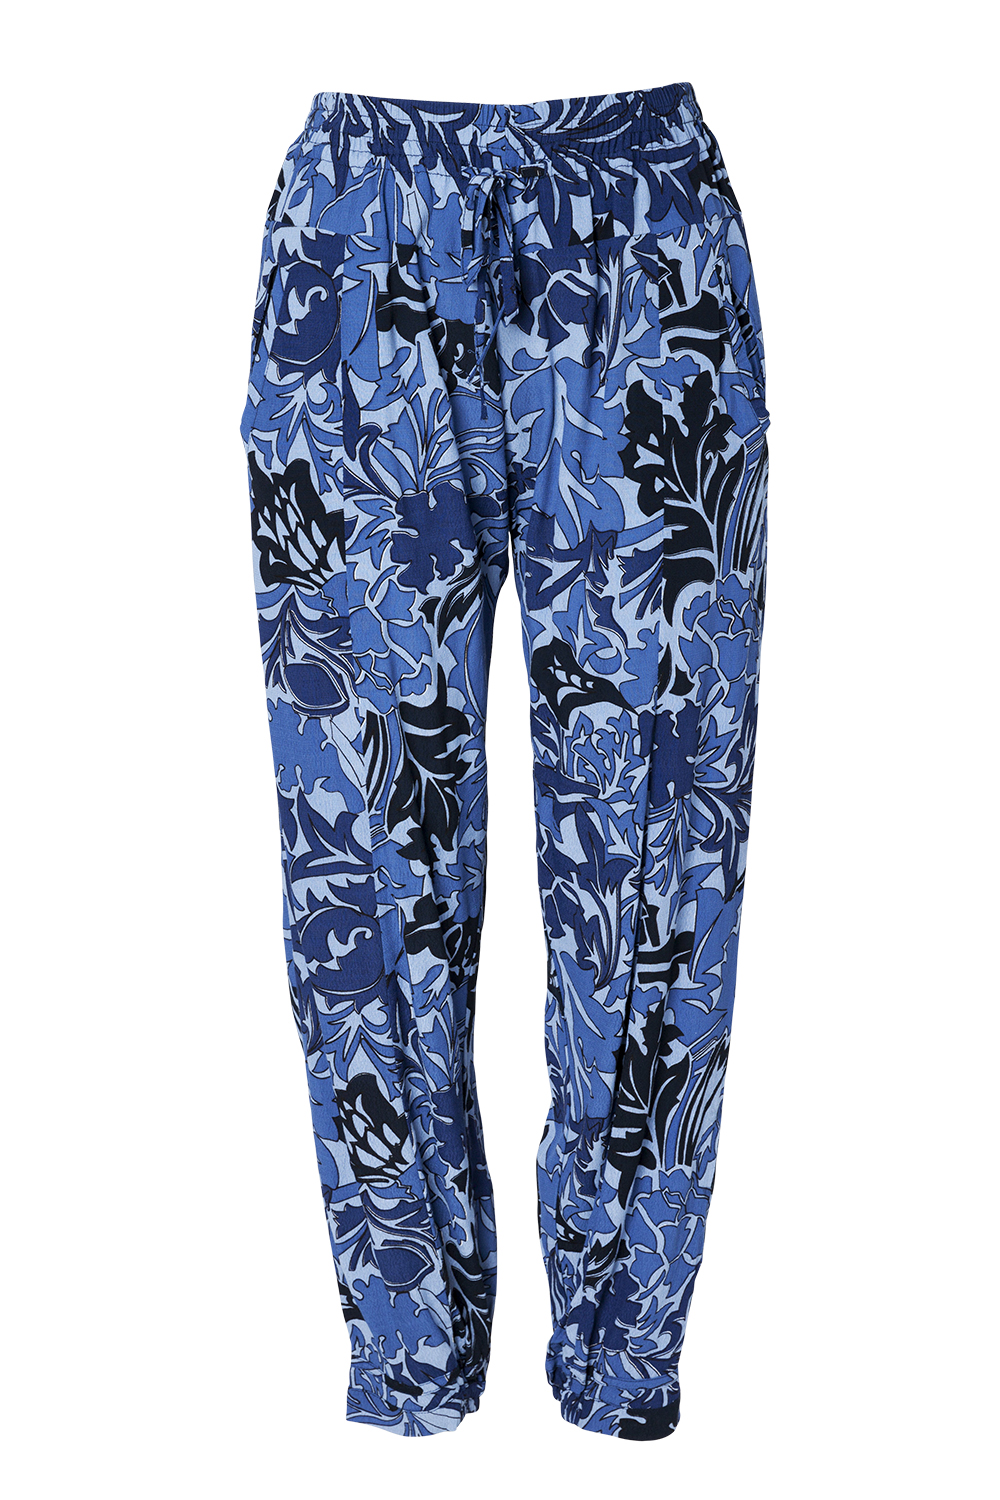 Pants, $219, by Bohemian Luxe.